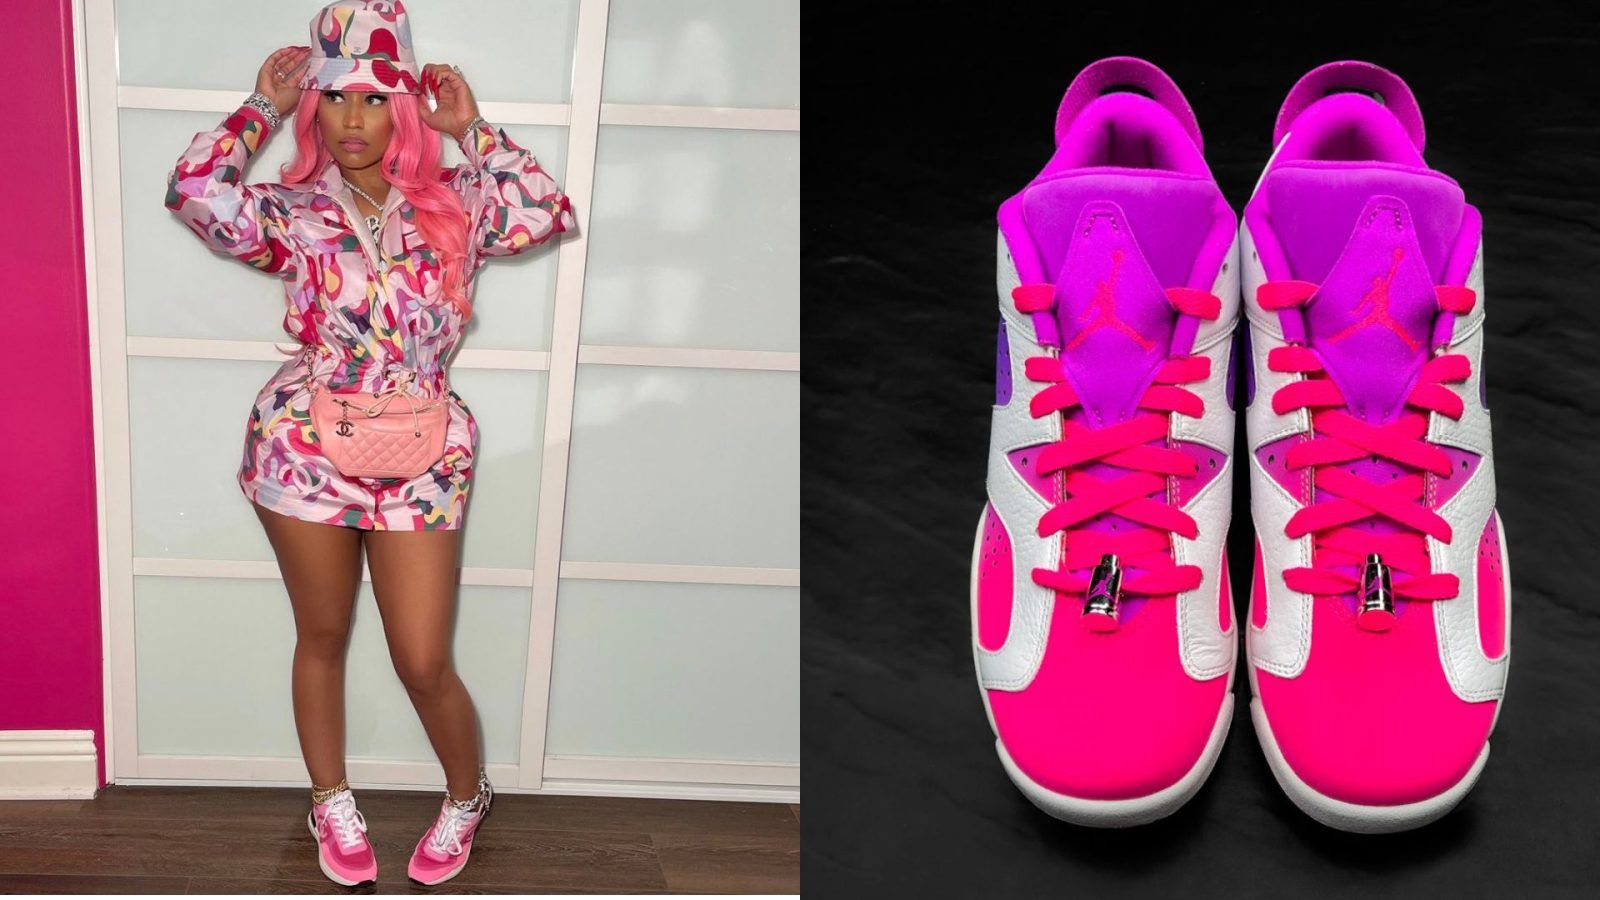 Nicki Minaj x Air Jordan 6 Low Pinkprint will soon be up for grabs